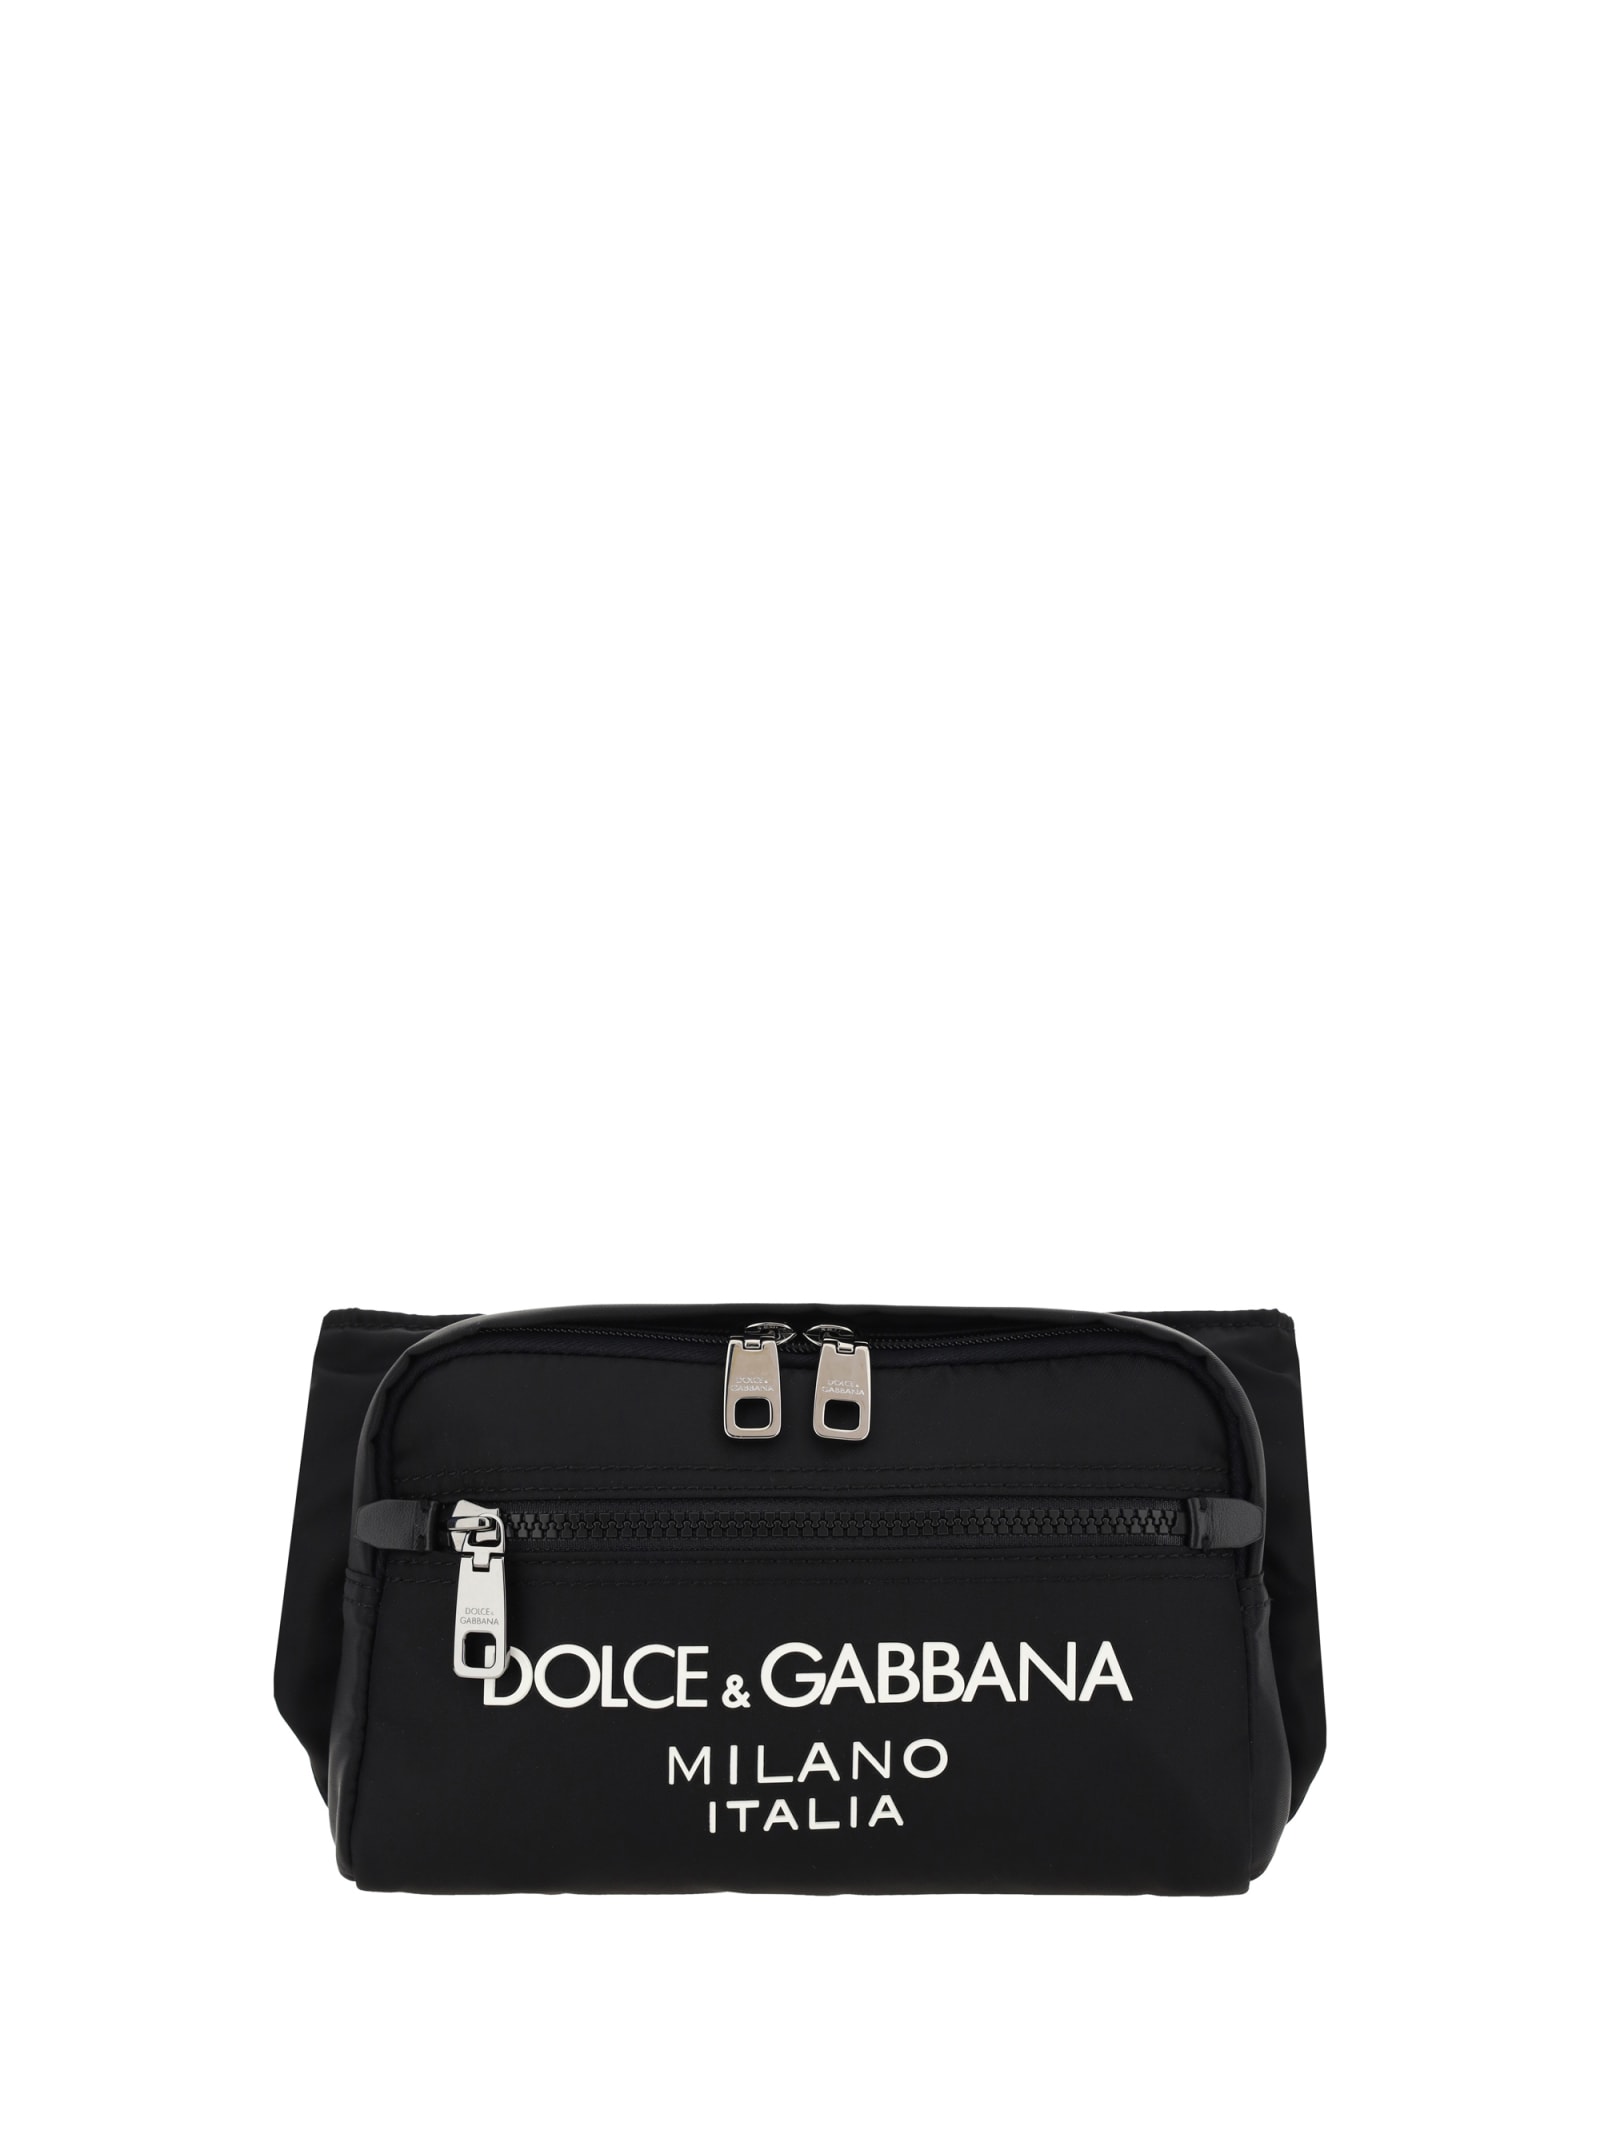 Dolce & Gabbana Fanny Pack In Nero/nero